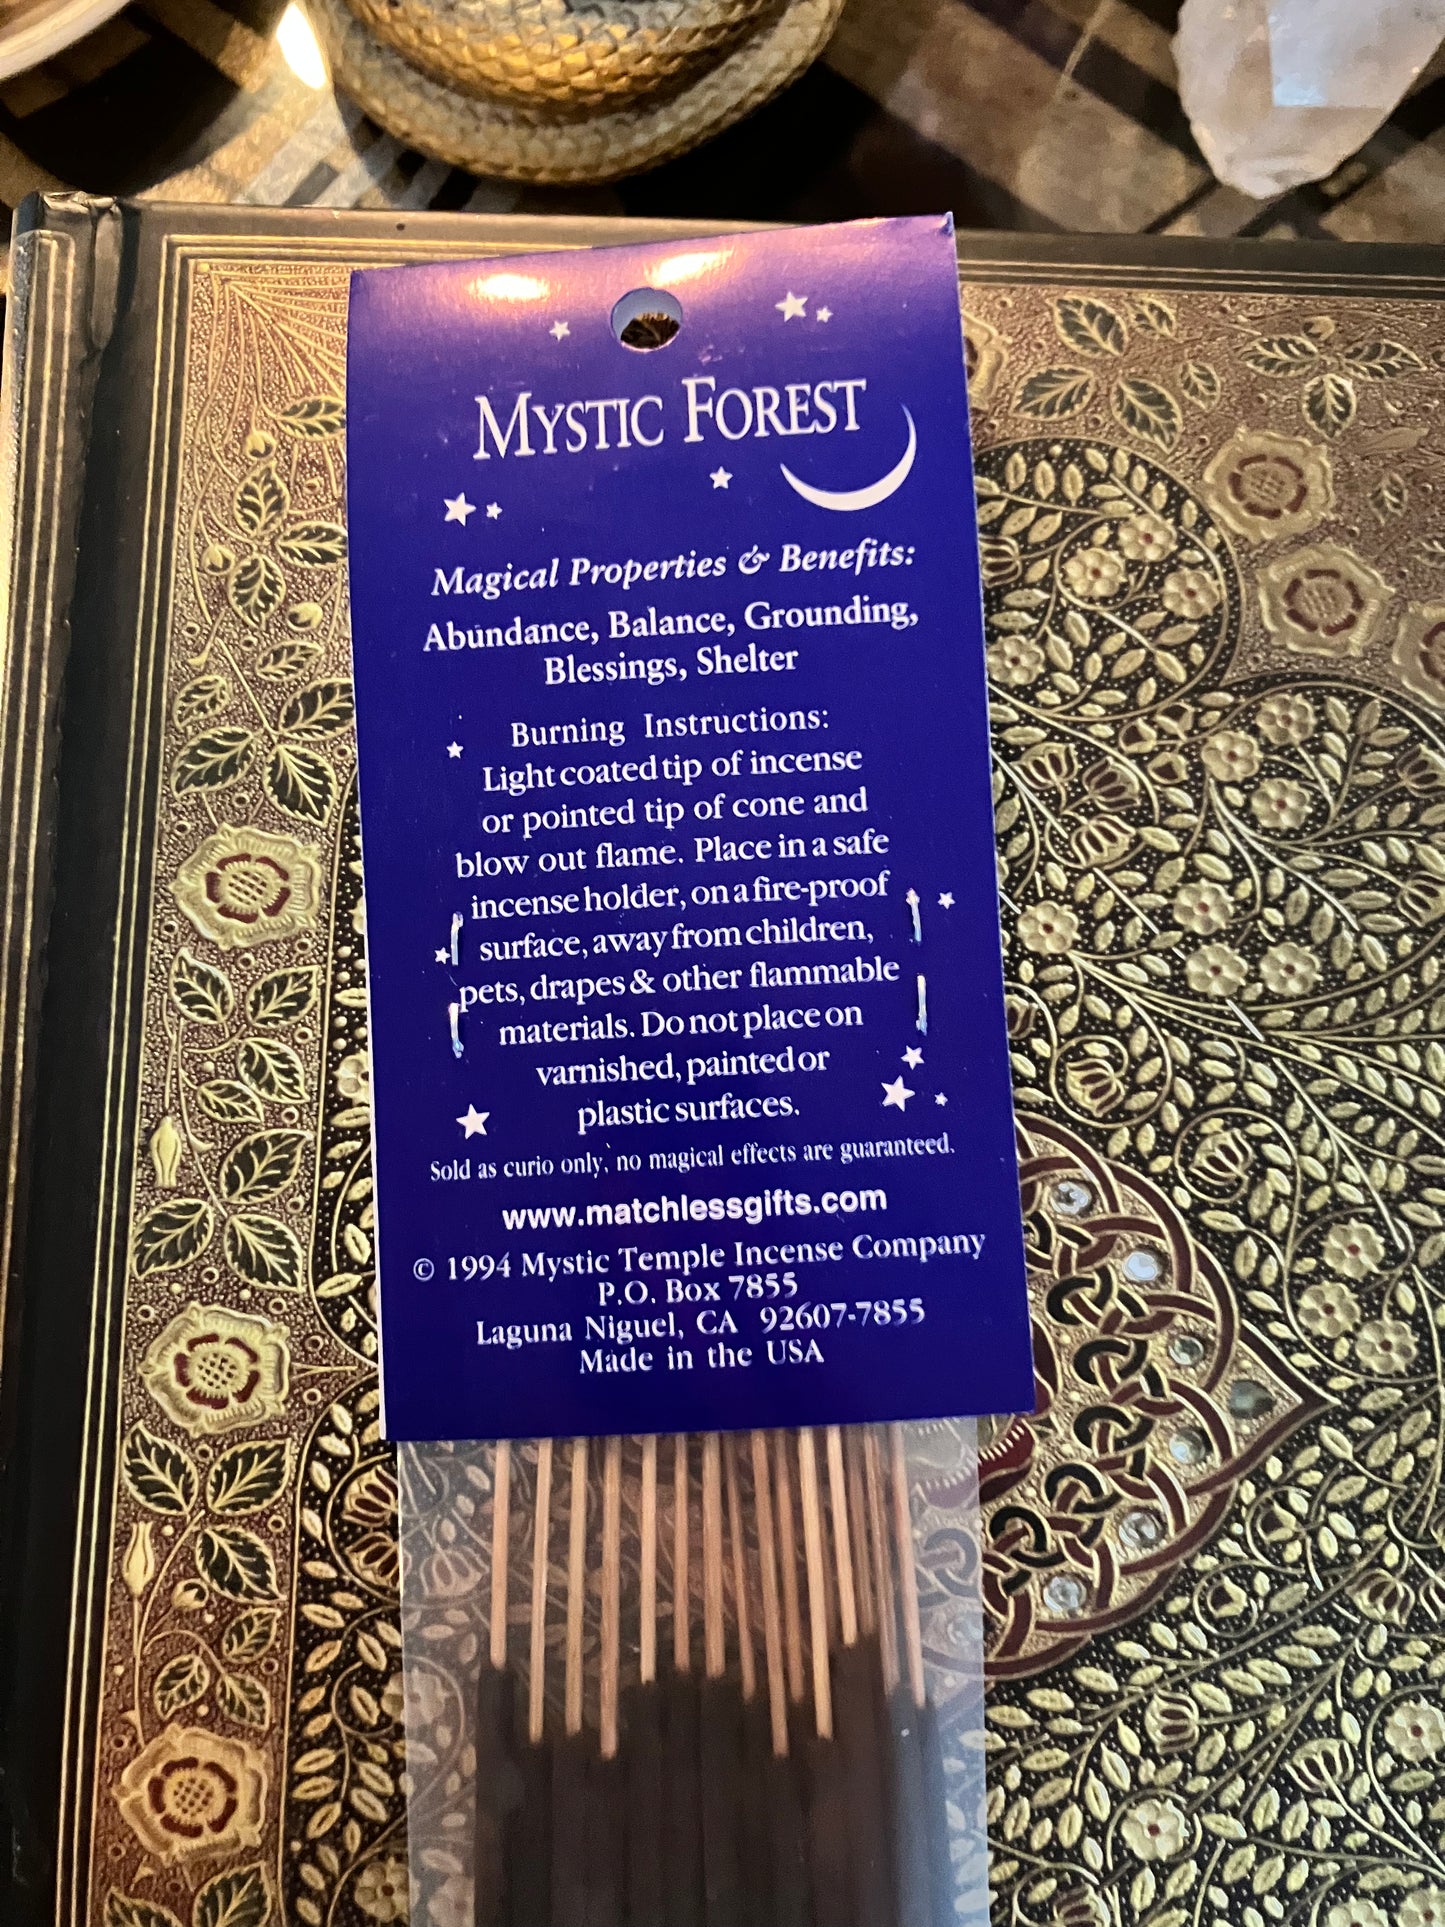 Mystic Forest Escential Essences Incense Sticks 16 pack